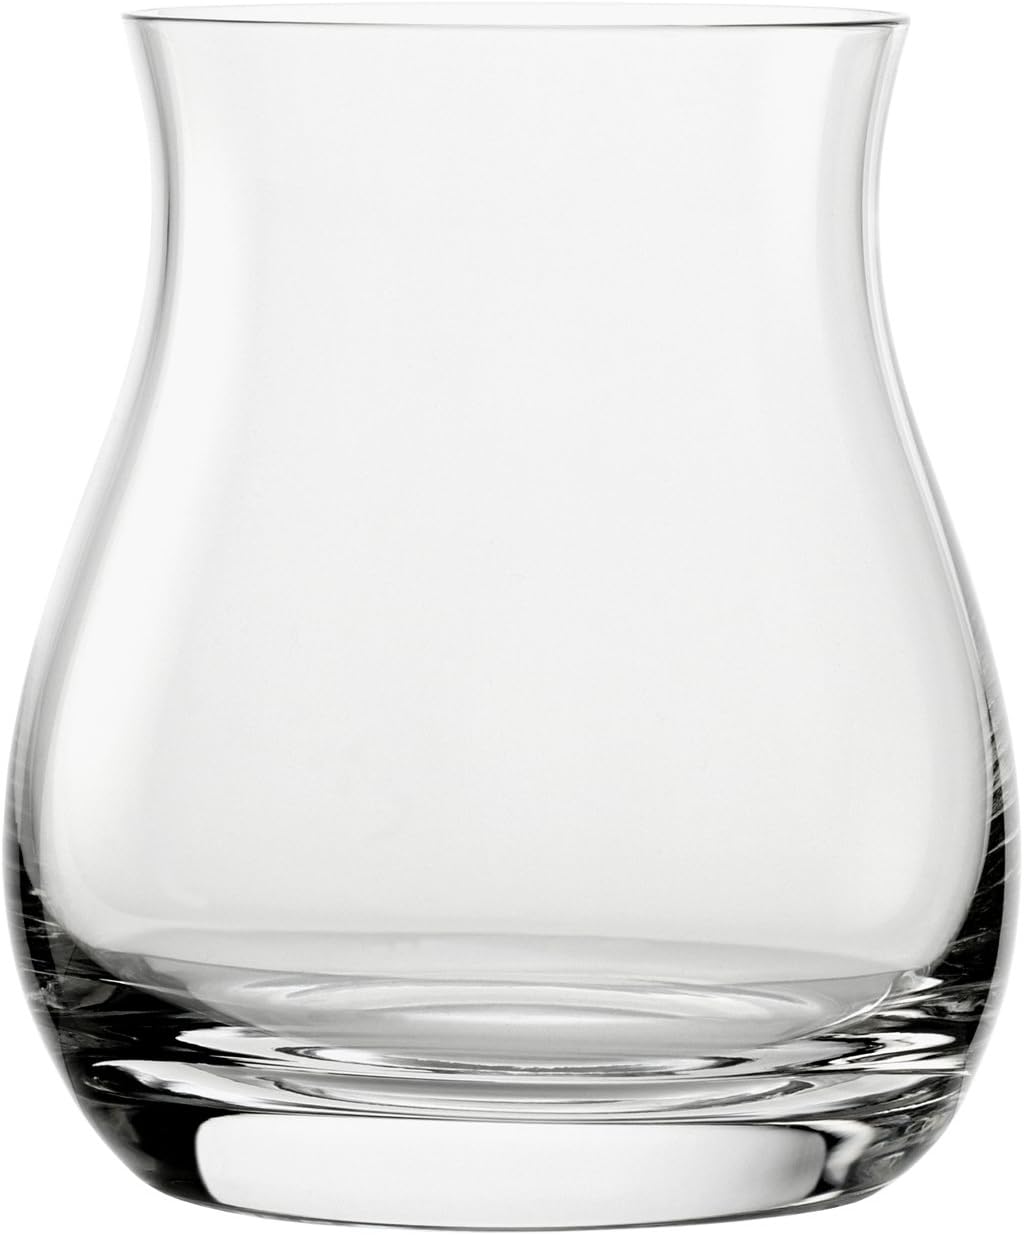 Stölzle, glass, transparent, 8 x 8 x 9.85 cm